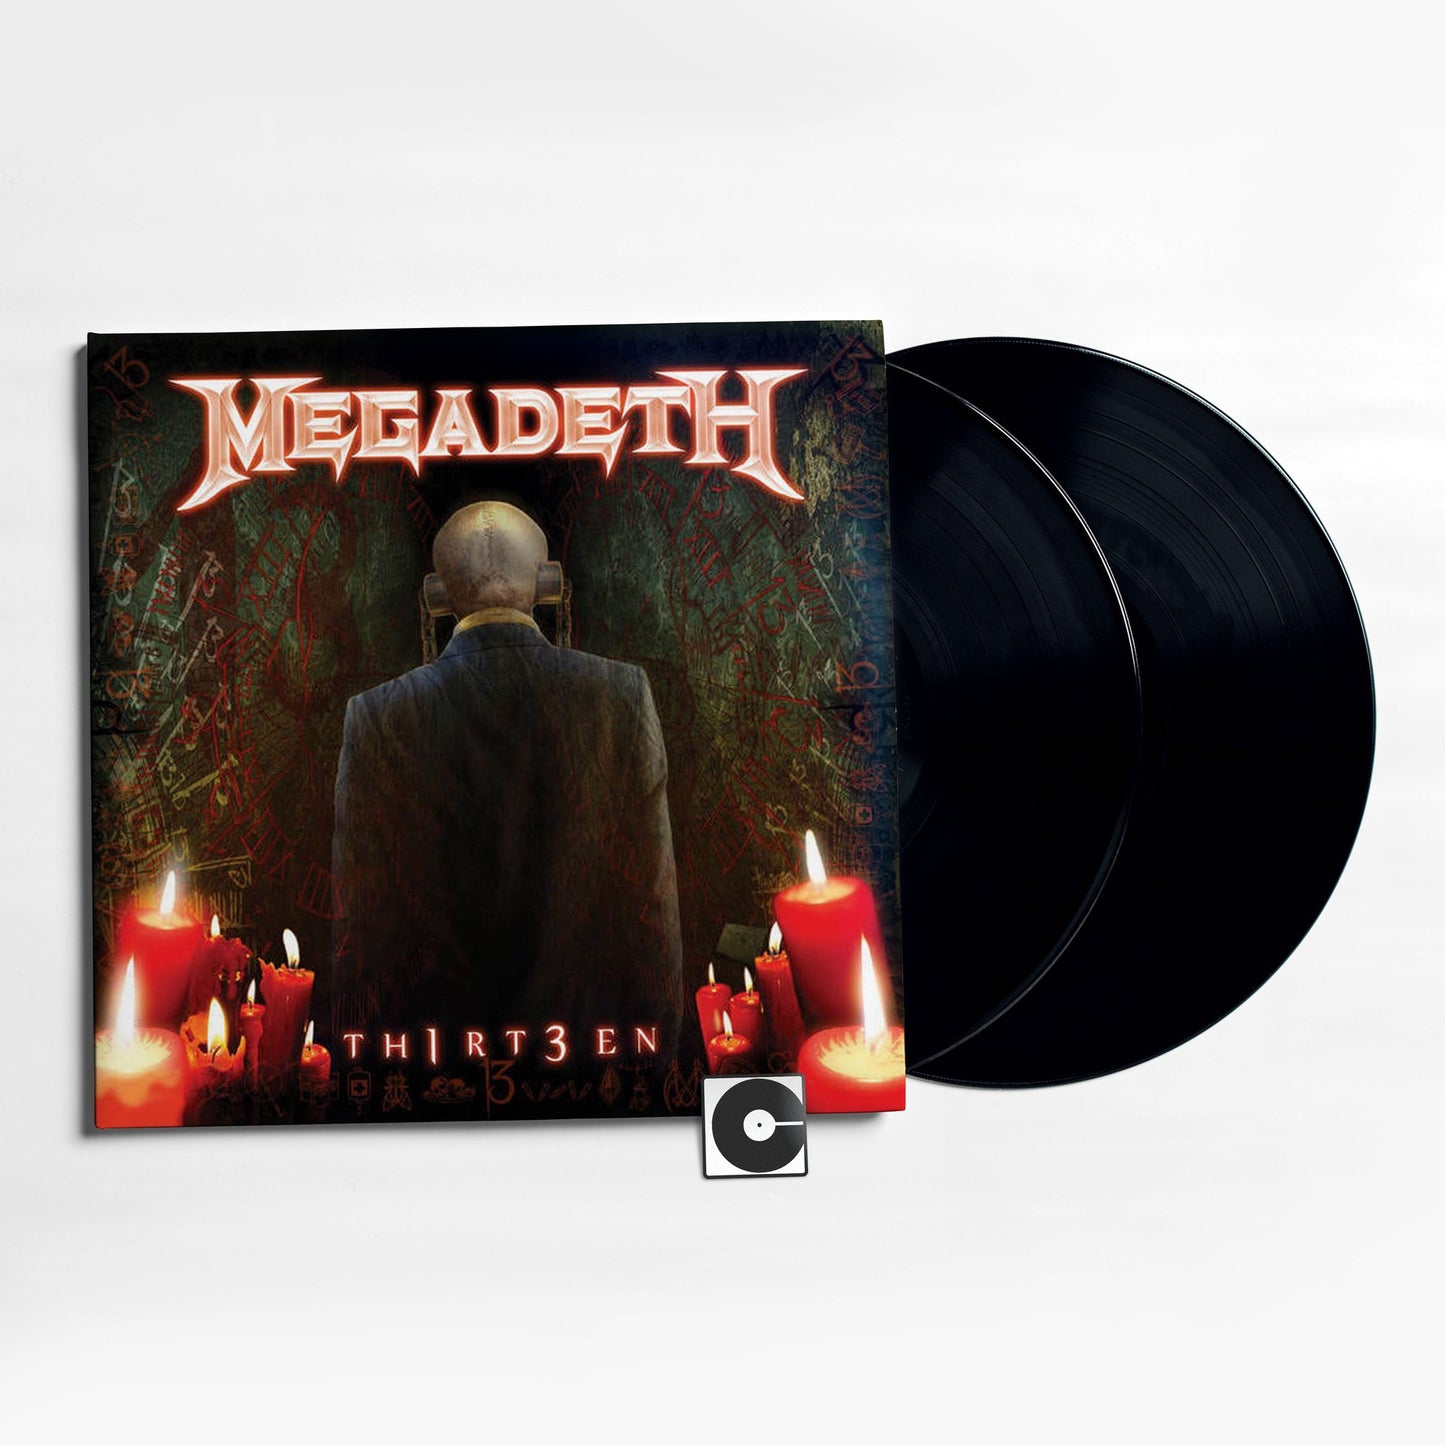 Megadeth - "Th1rt3en"